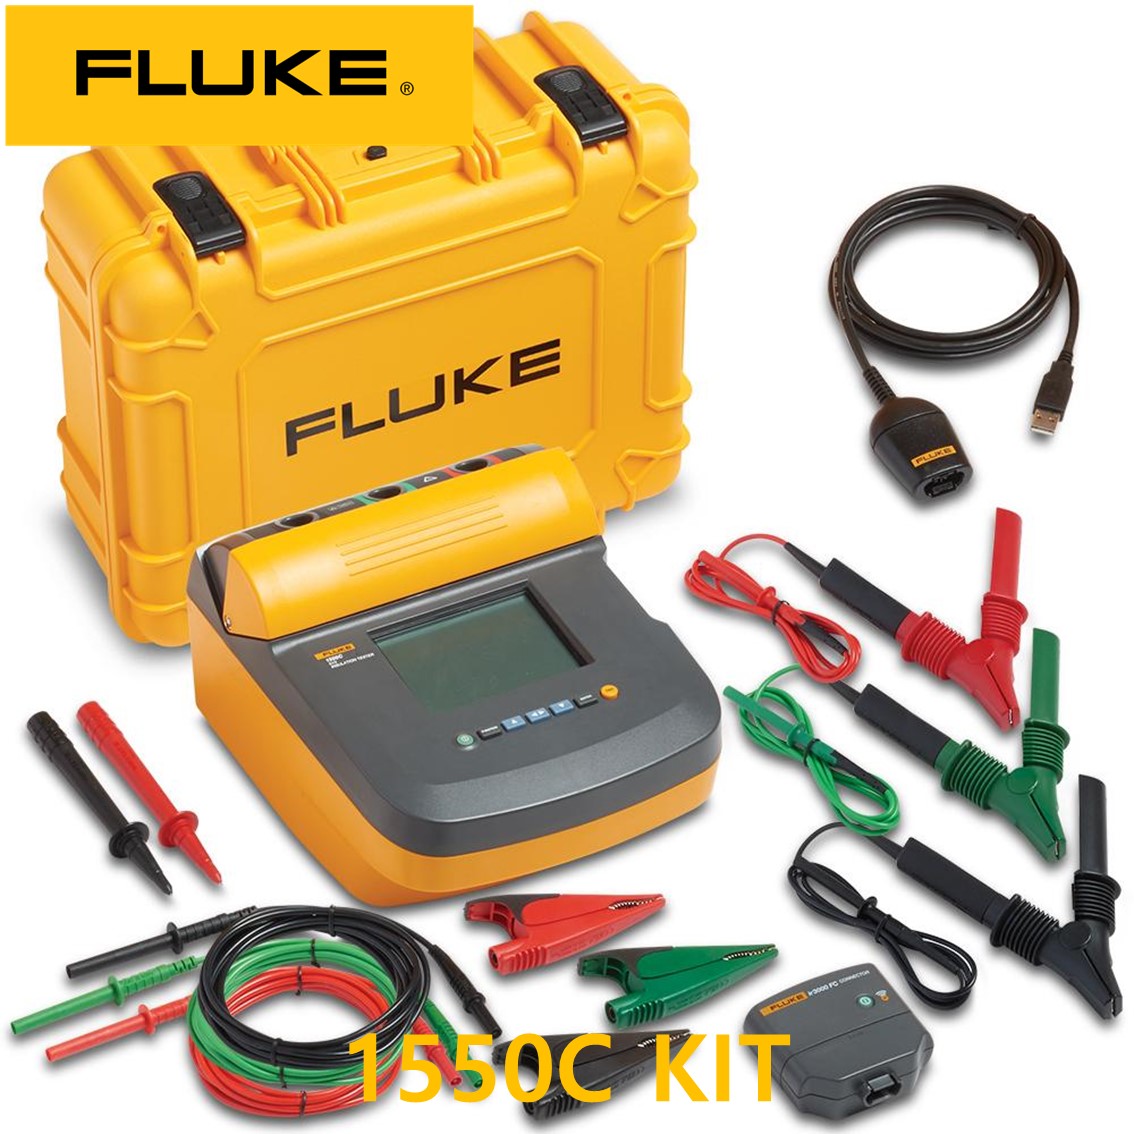 [ FLUKE 1550C KIT ] 정품 플루크 절연저항계 1550C KIT (5KV), 절연시험기,  절연저항계 키트